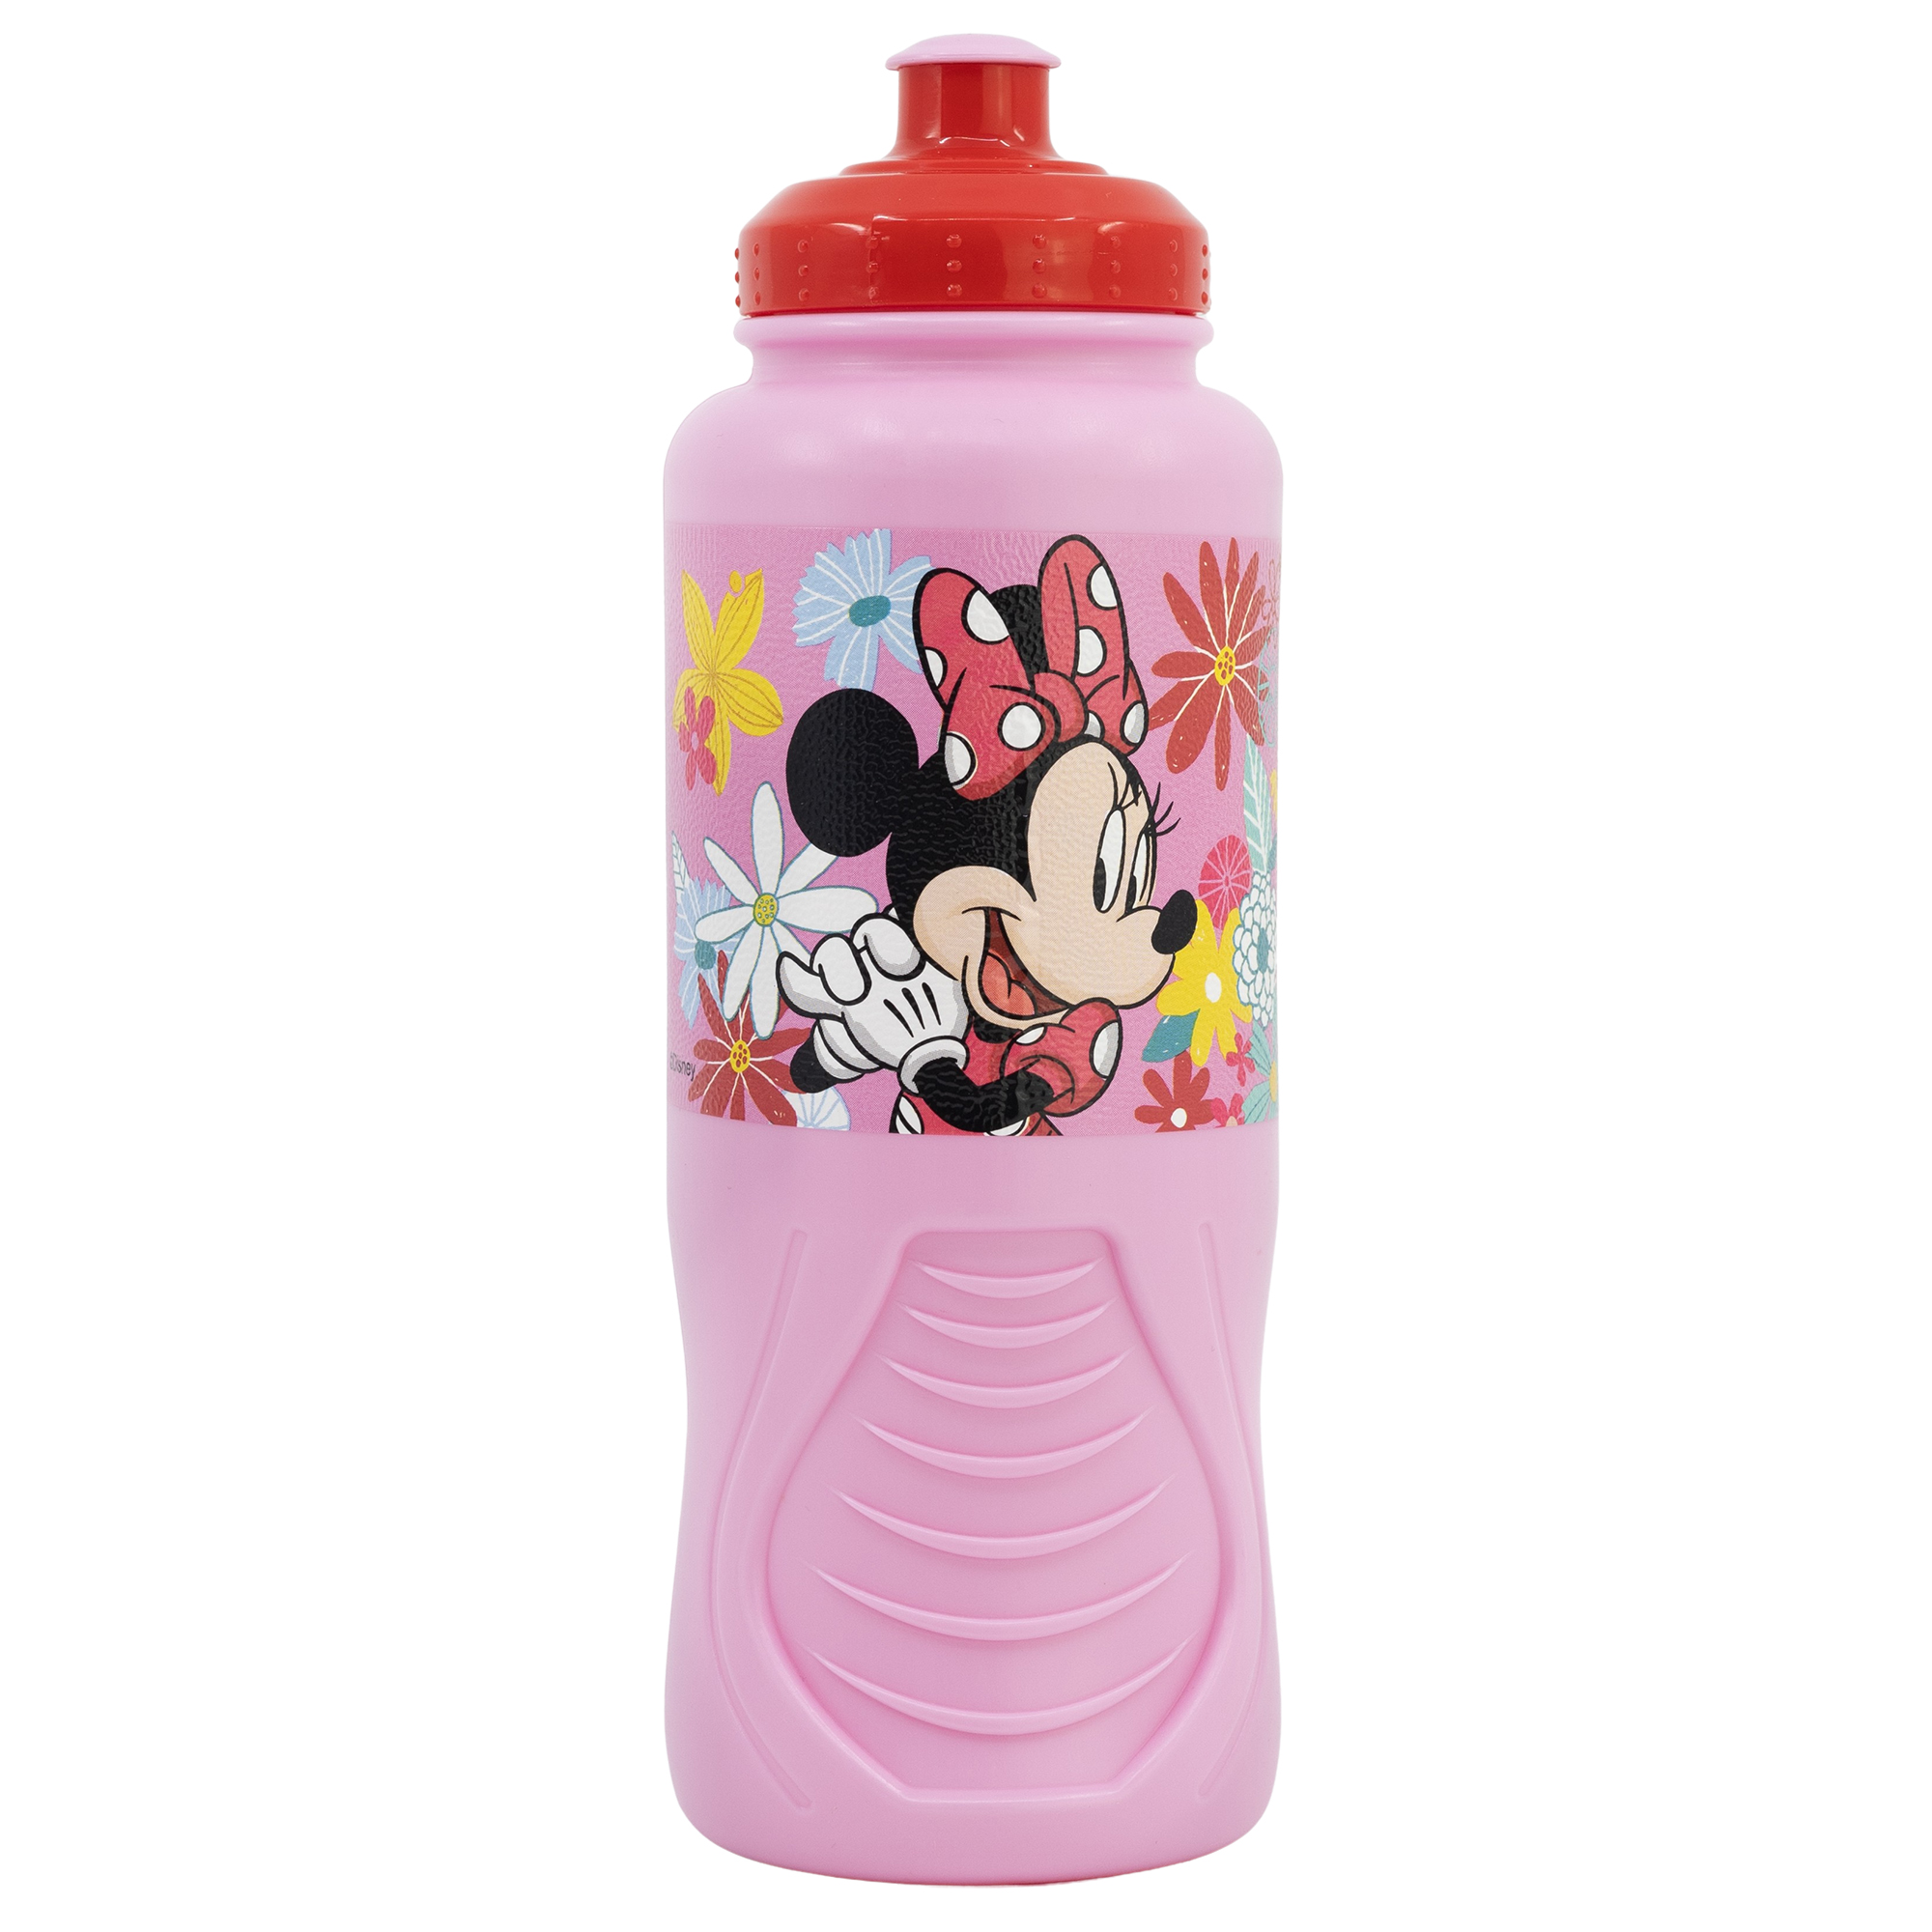 Ergo-Flasche für Kinder aus Kunststoff, 430 ml, Minnie Mouse-Frühlingsoptik 